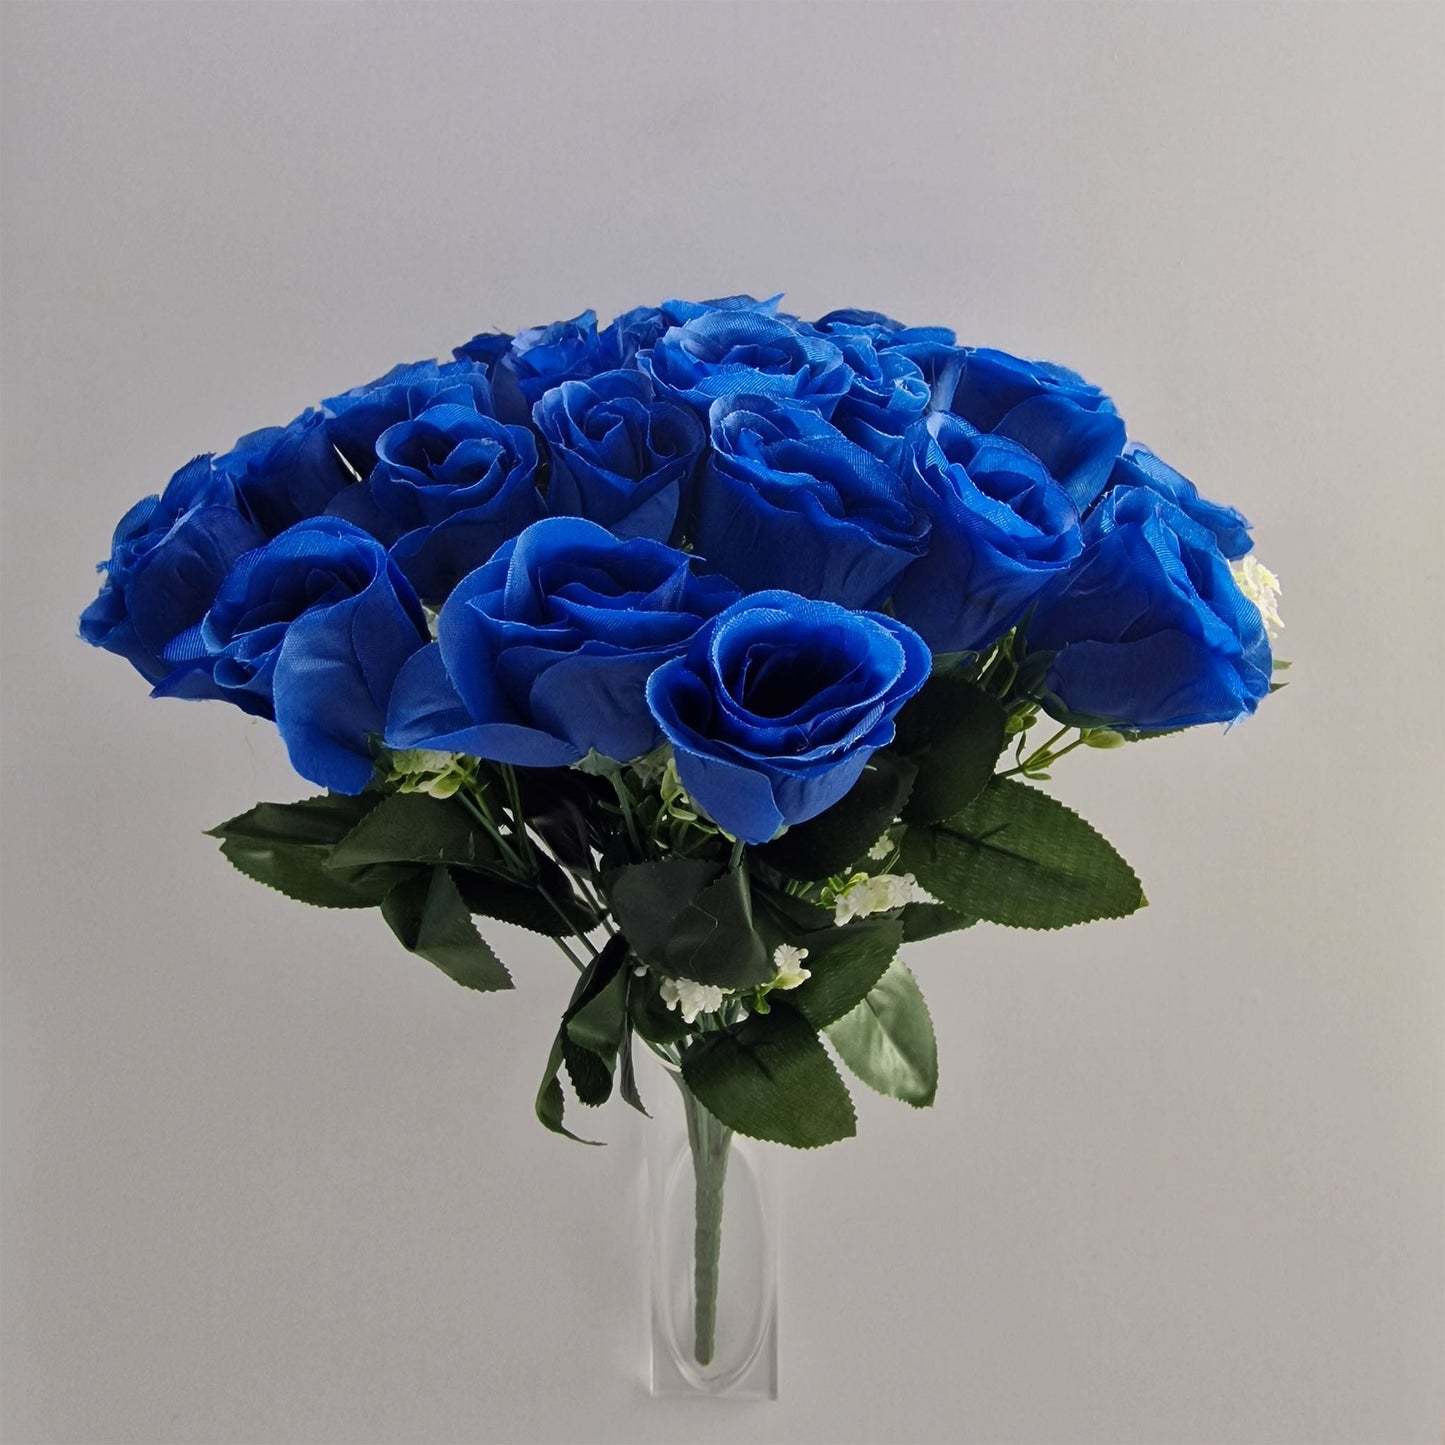 24 Head Large Rose Bouquet in Blue - Amor Flowers